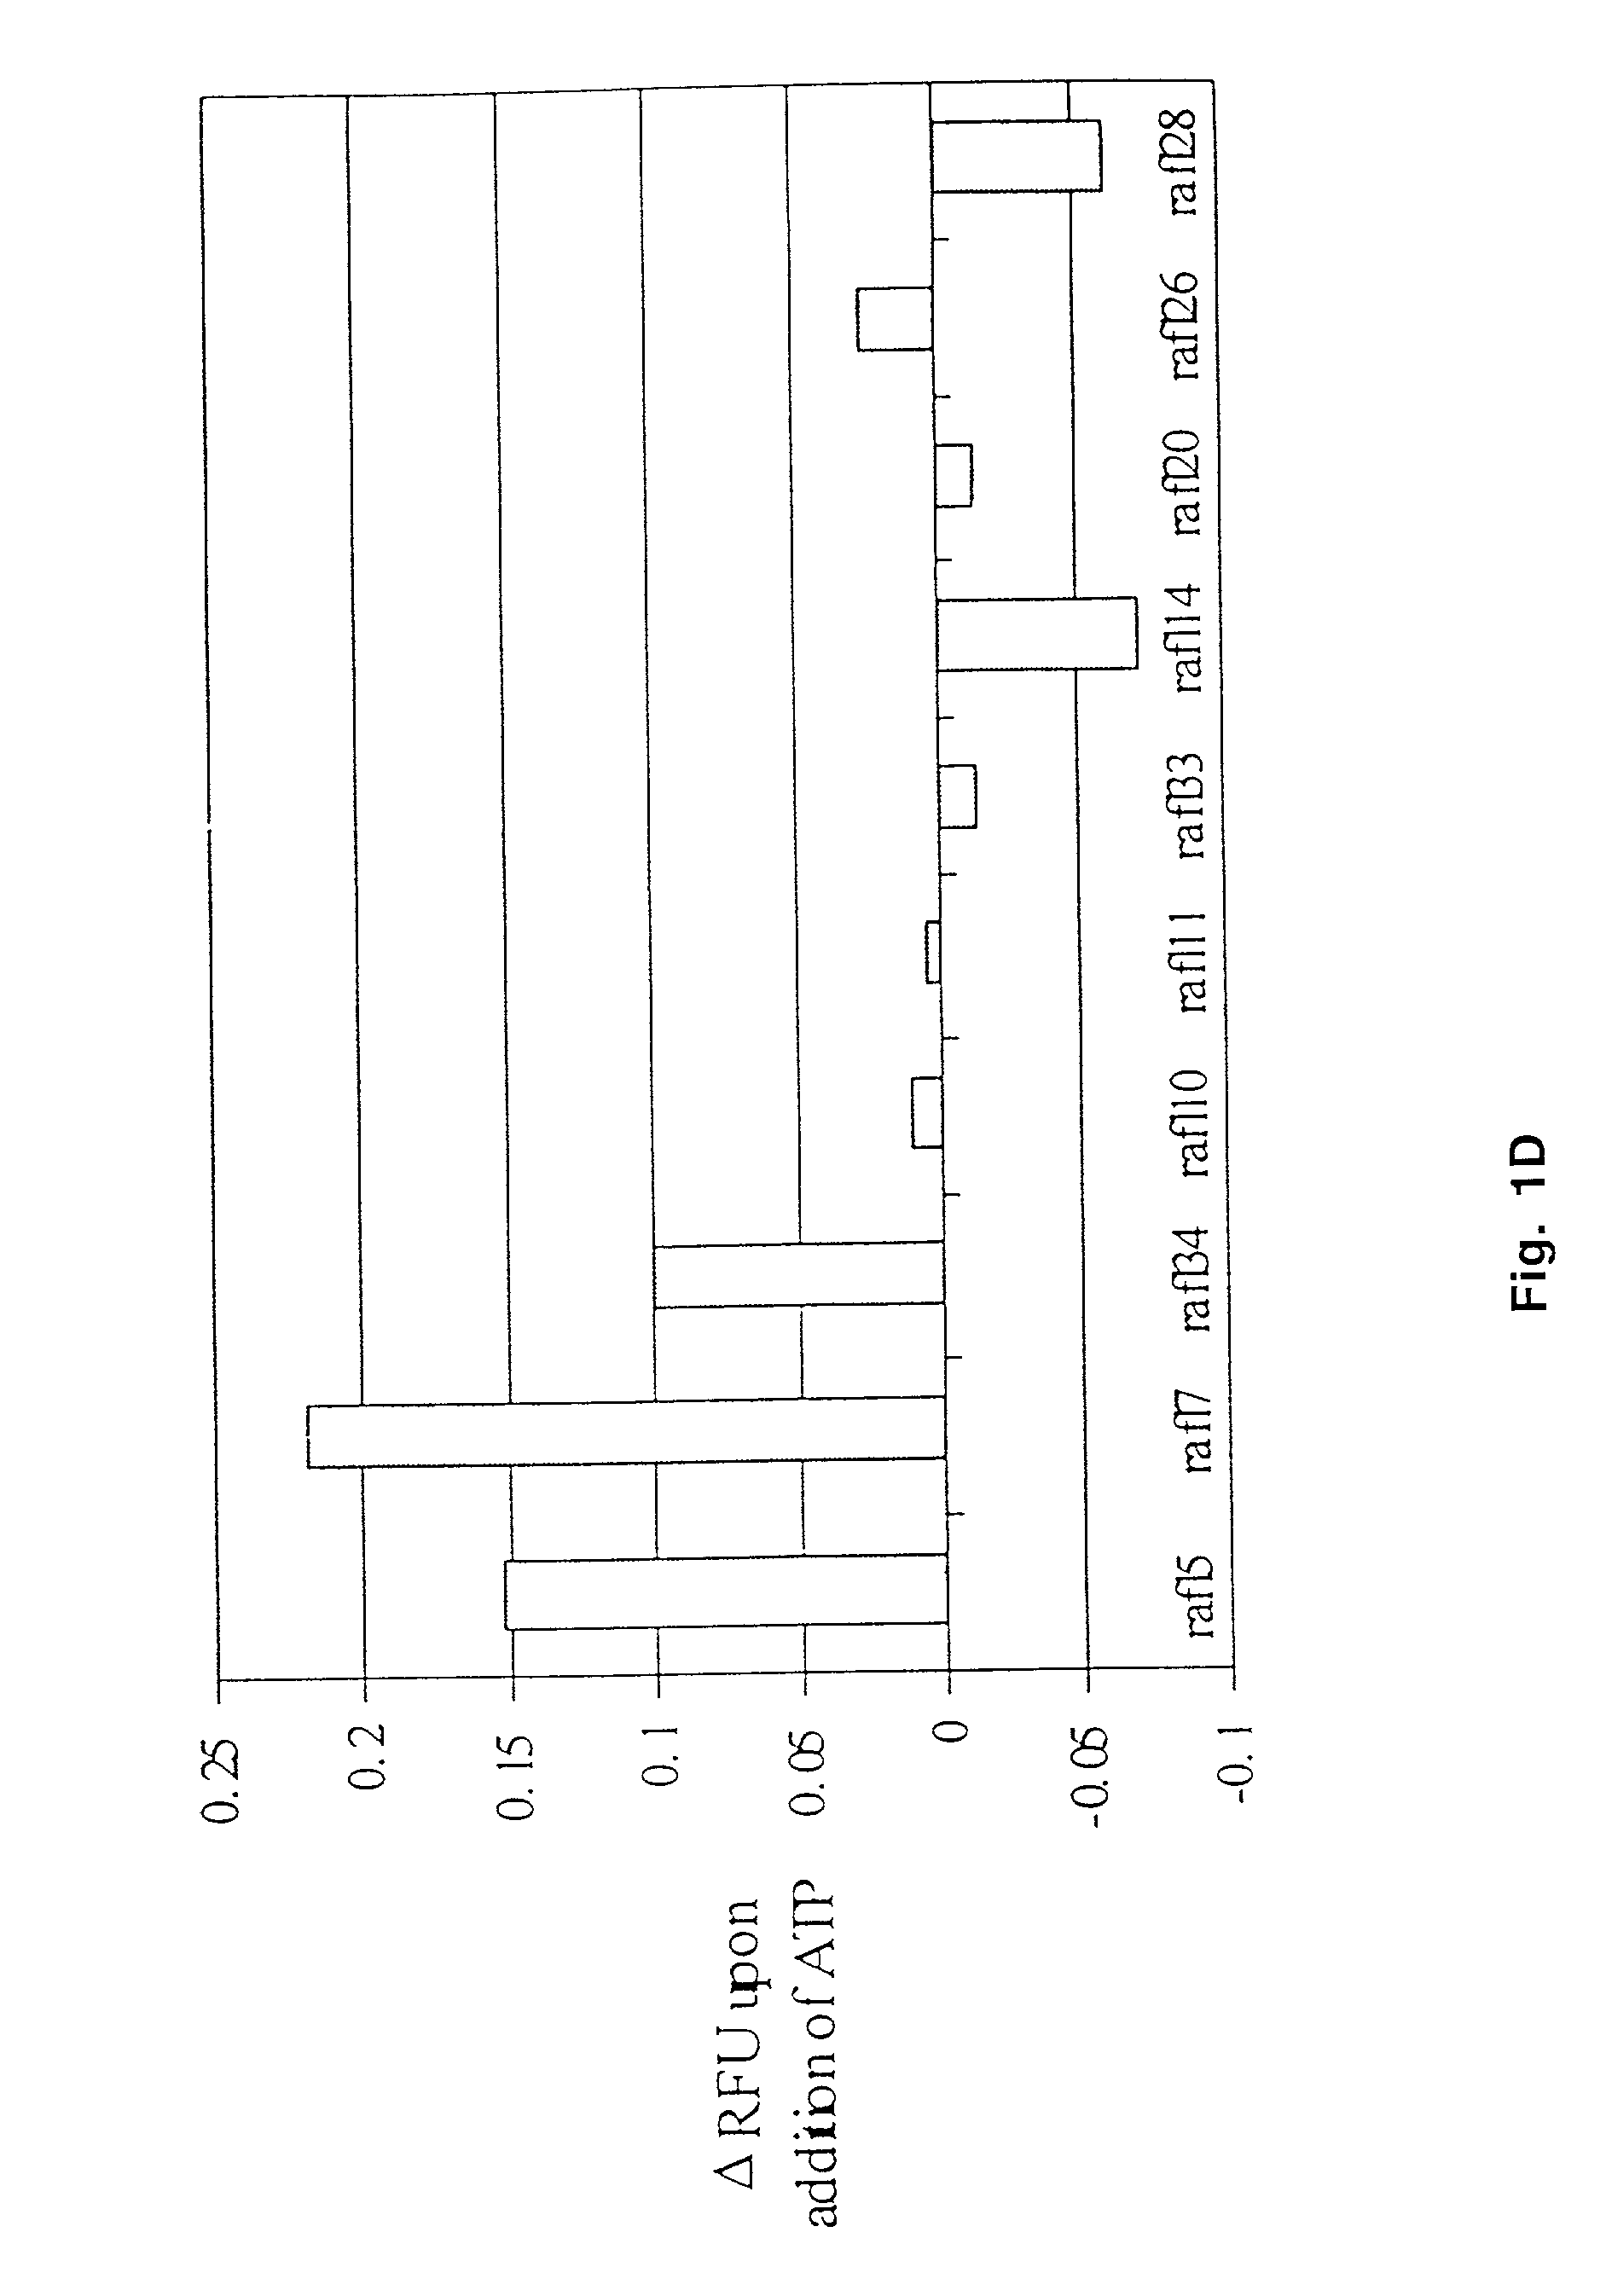 In vitro selection of signaling aptamers